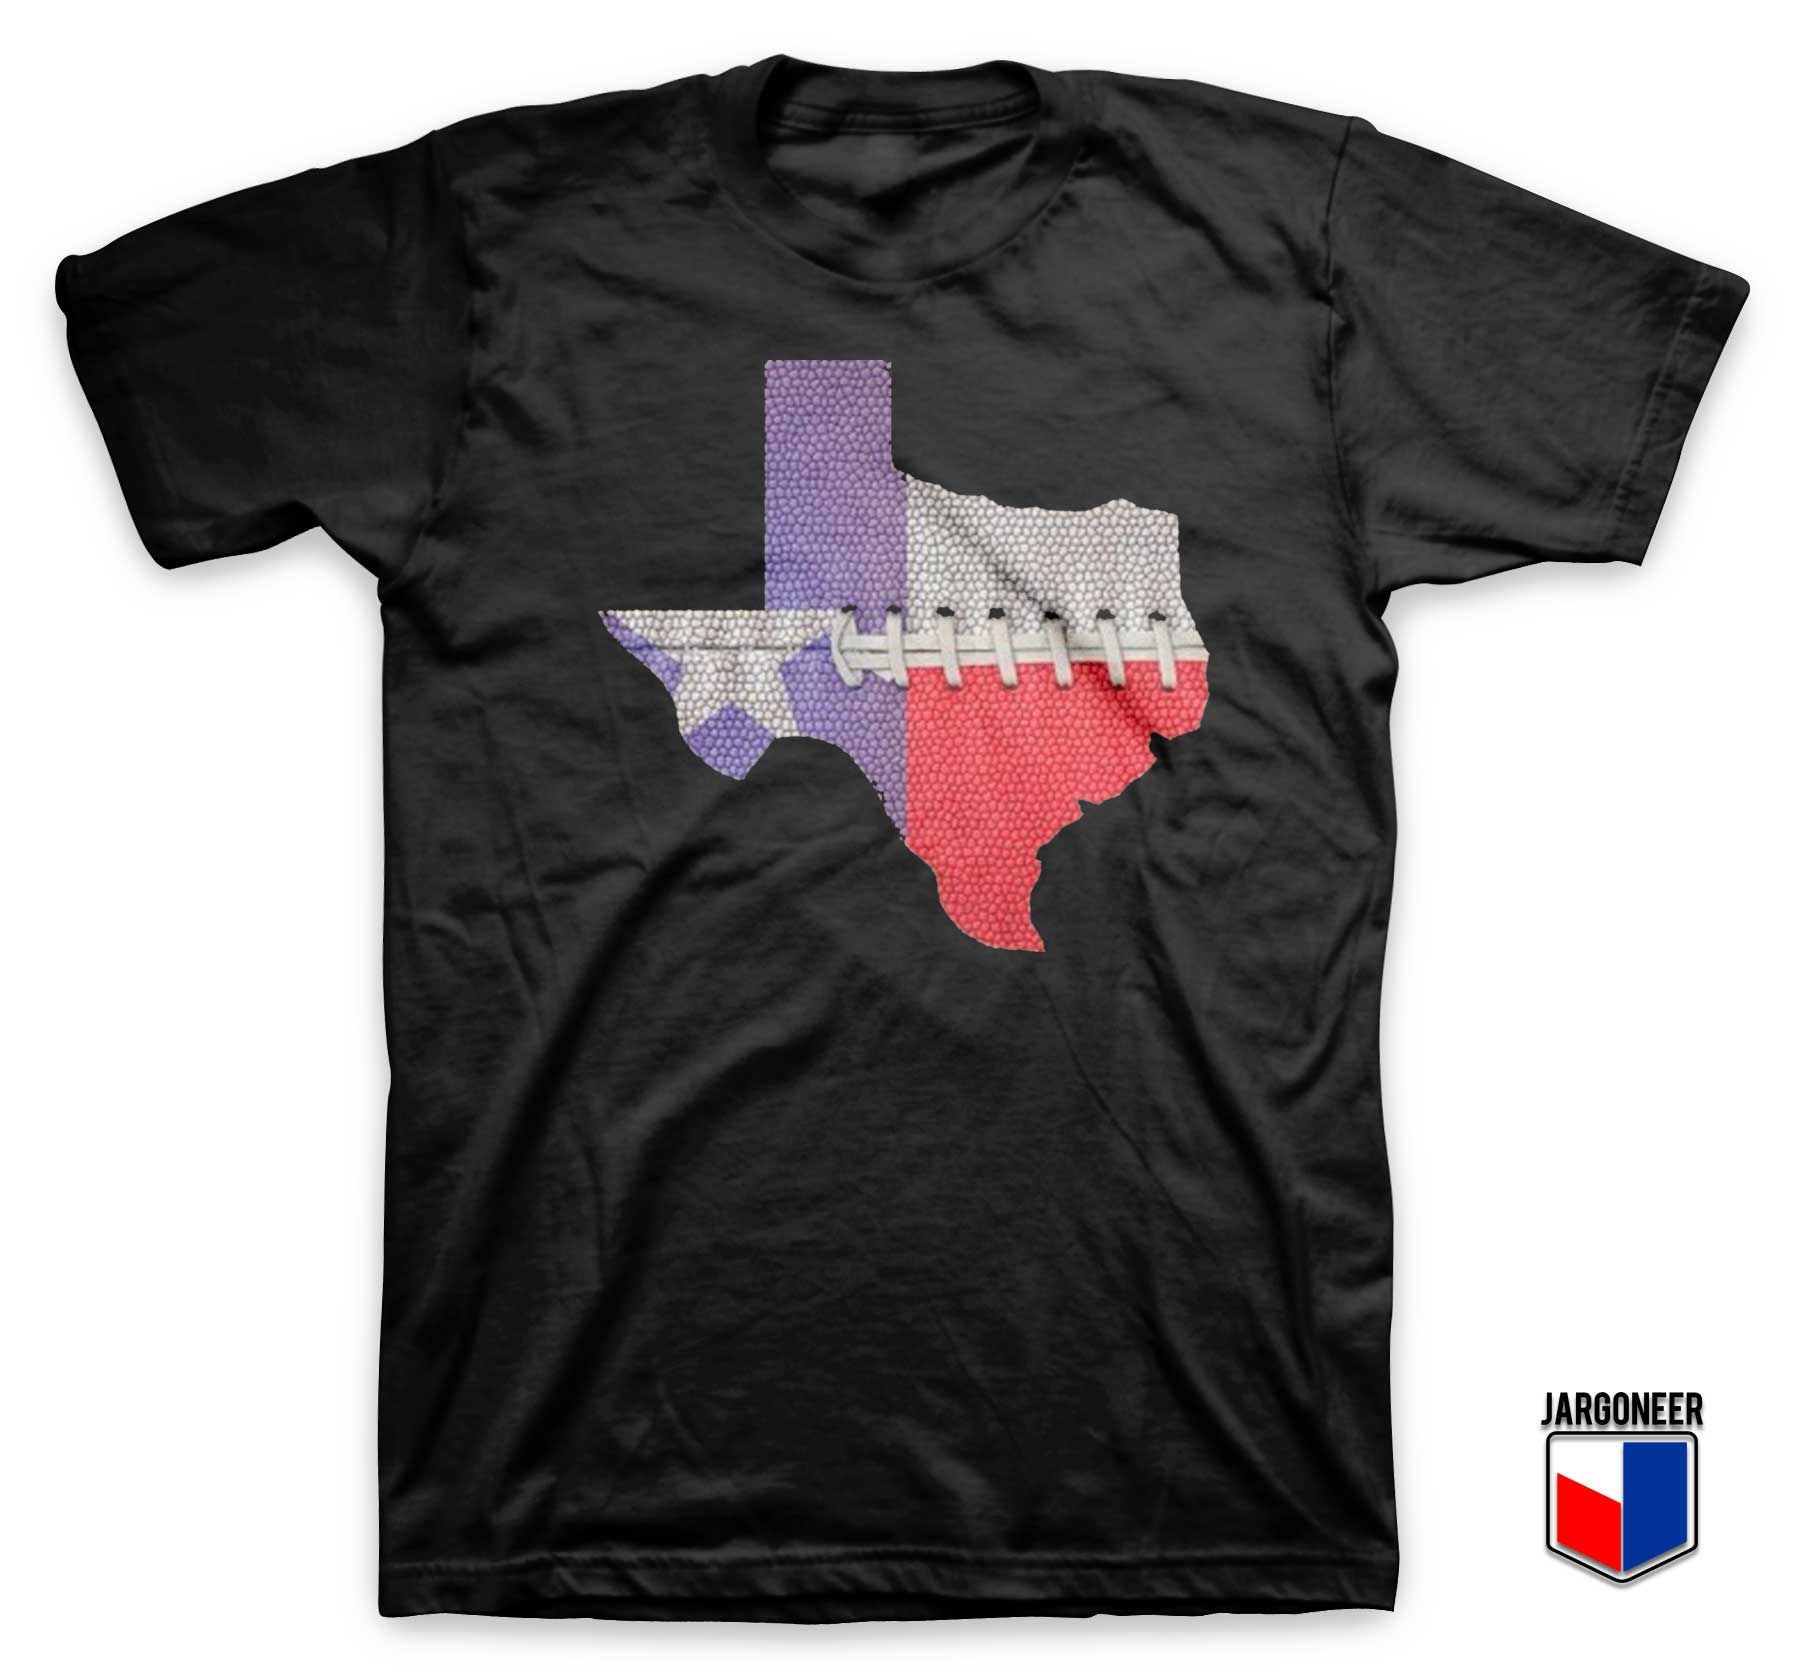 Texas High School Football T Shirt - Shop Unique Graphic Cool Shirt Designs